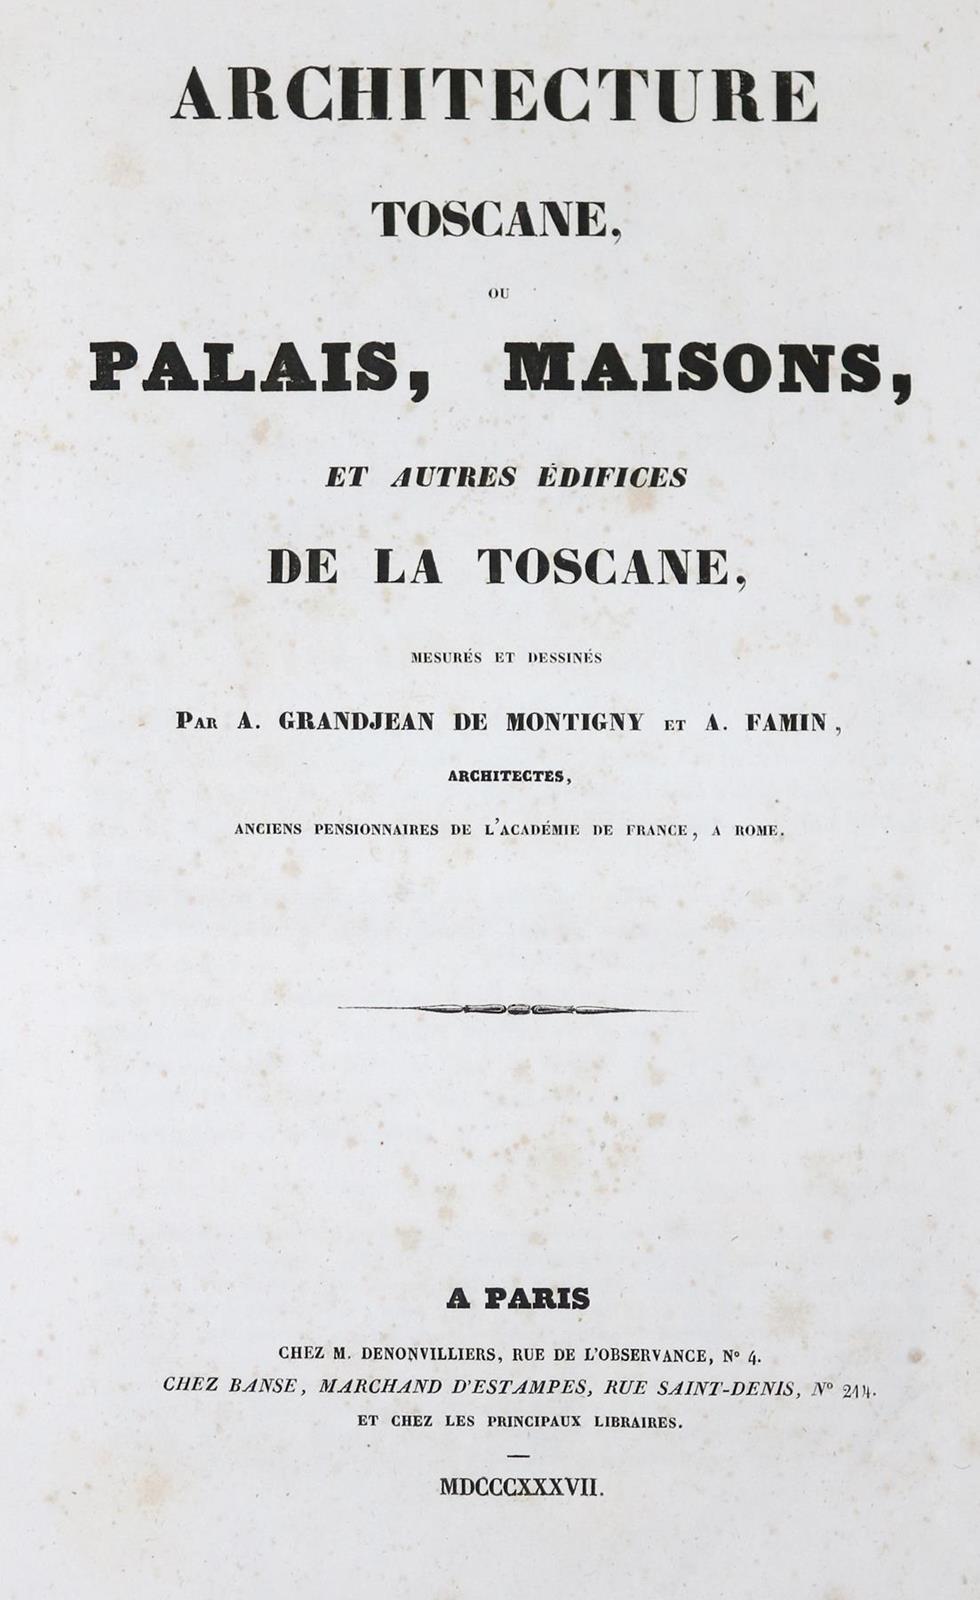 Grandjean de Montigny,A. u. A.Famin. - Bild 2 aus 2